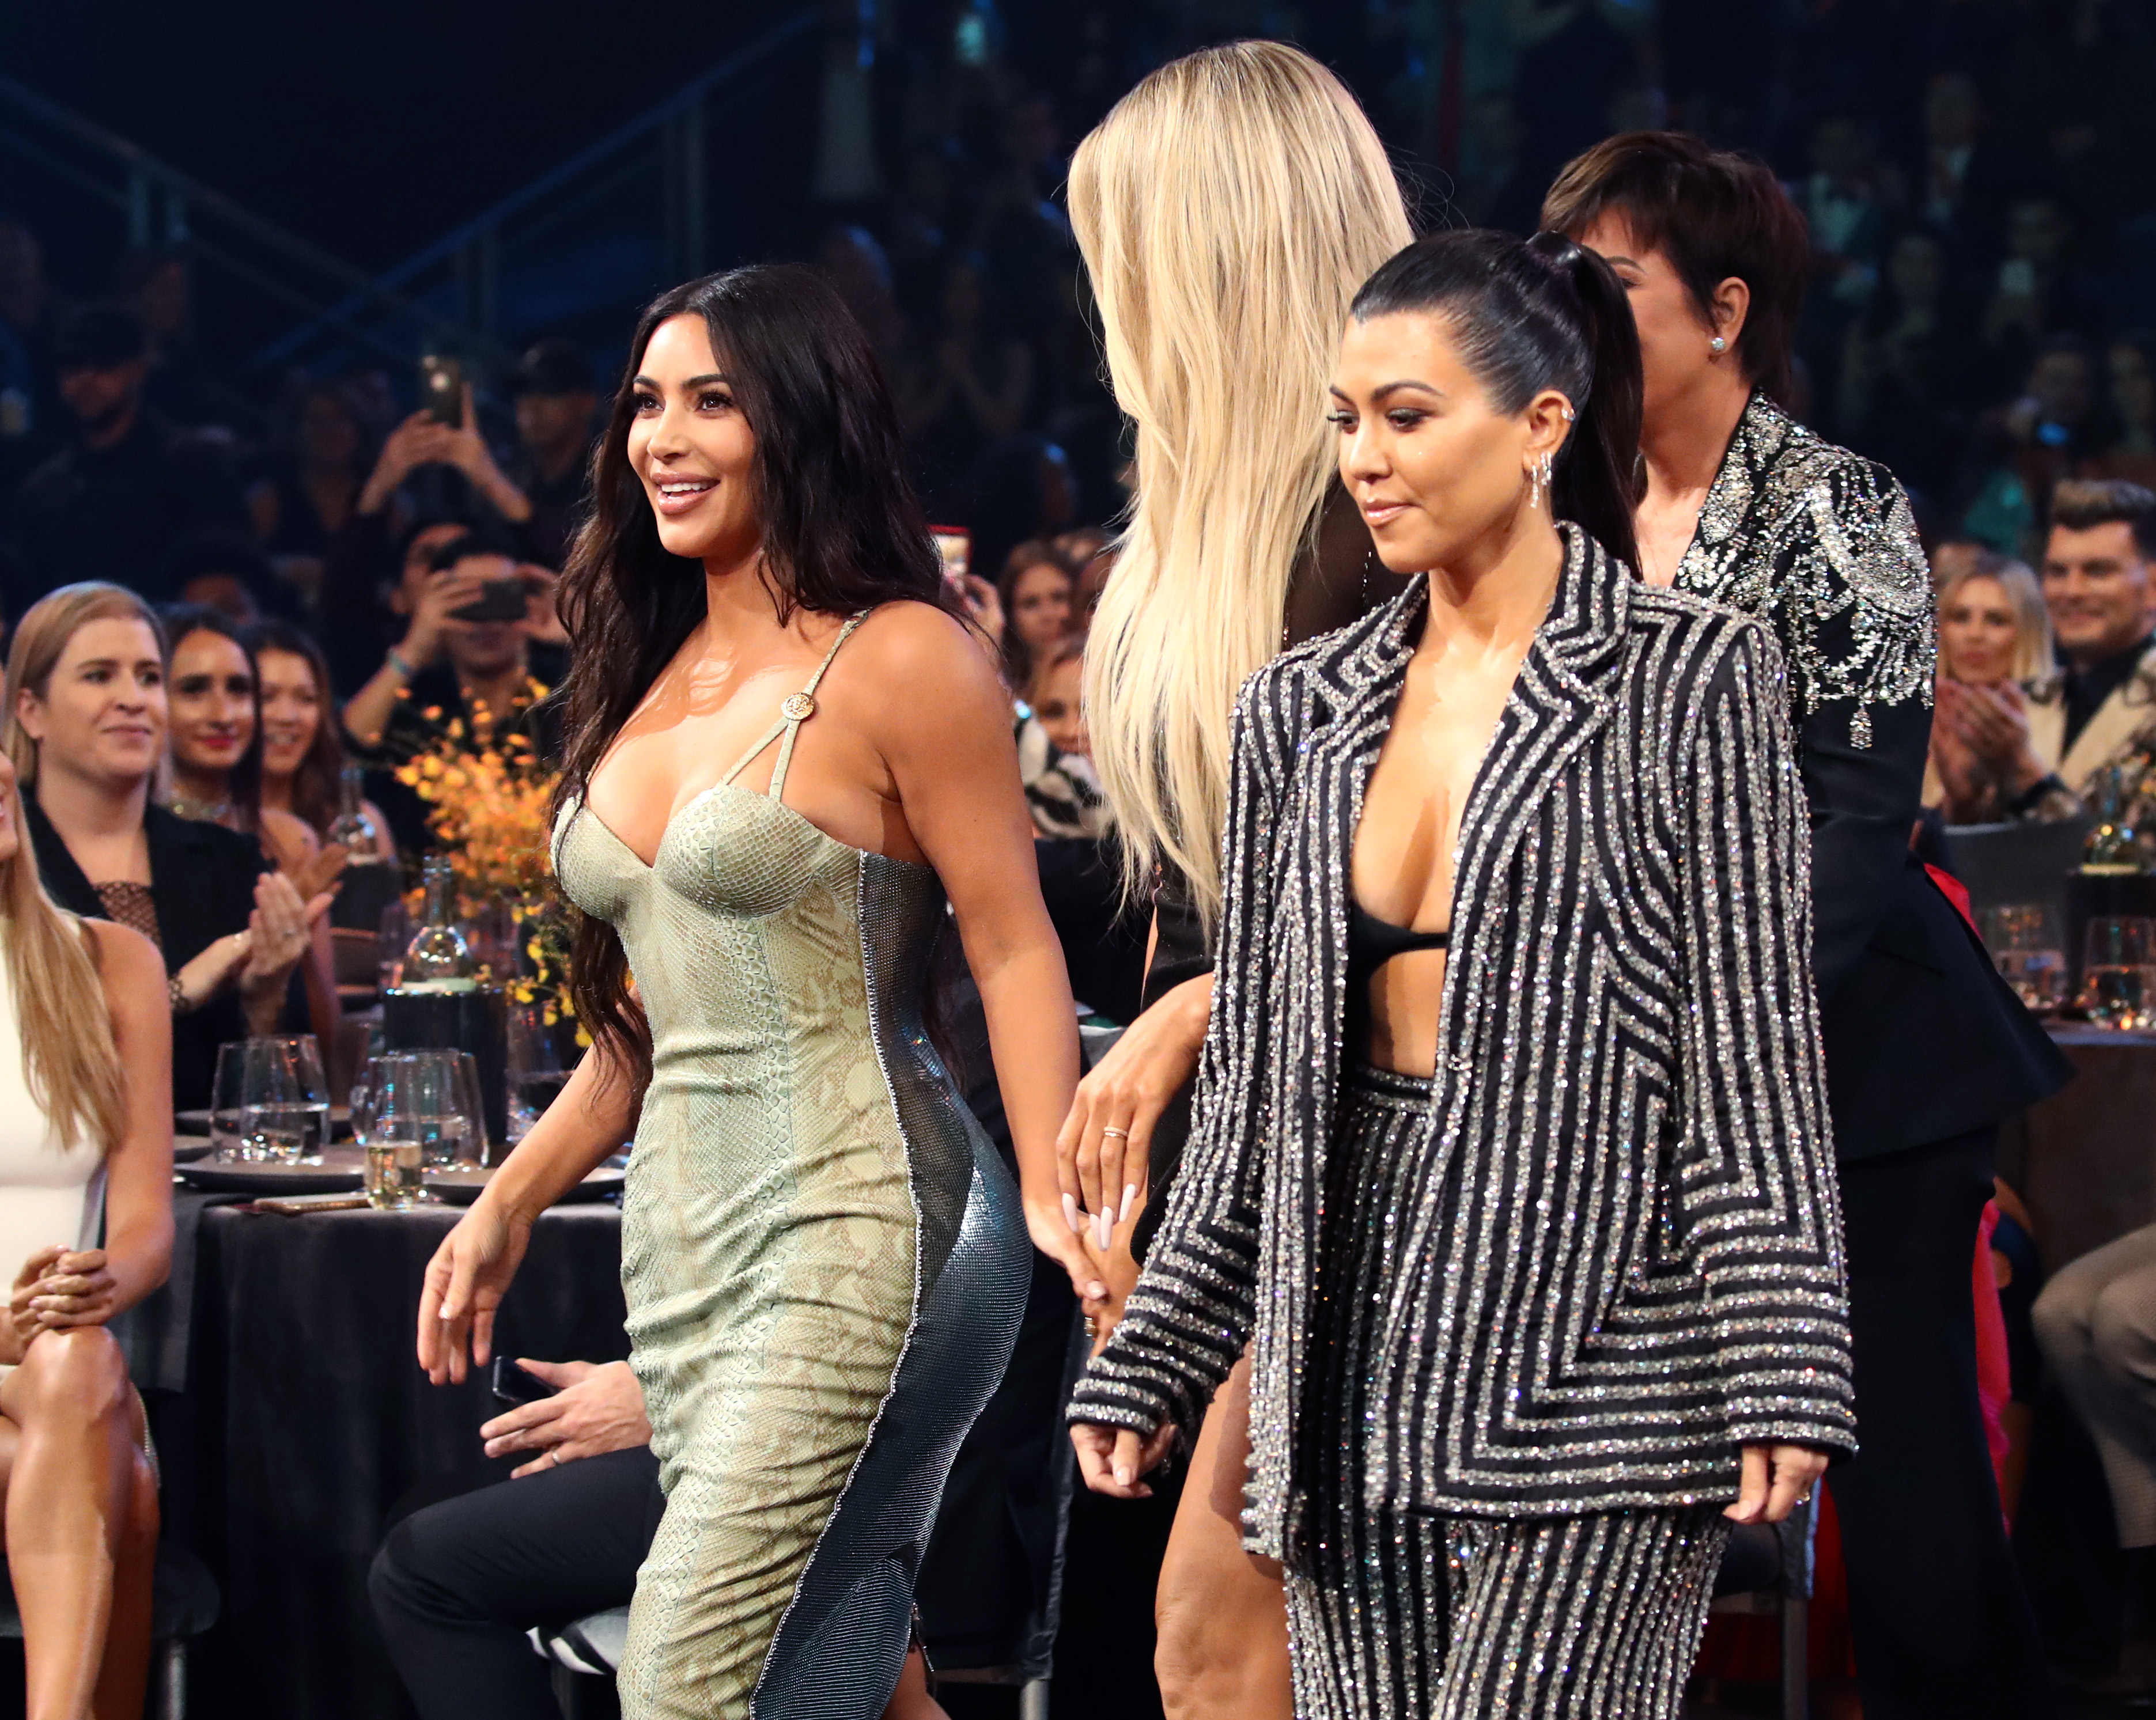 Kim Kardashian in a metallic dress and Kourtney Kardashian in a pinstriped suit at an event